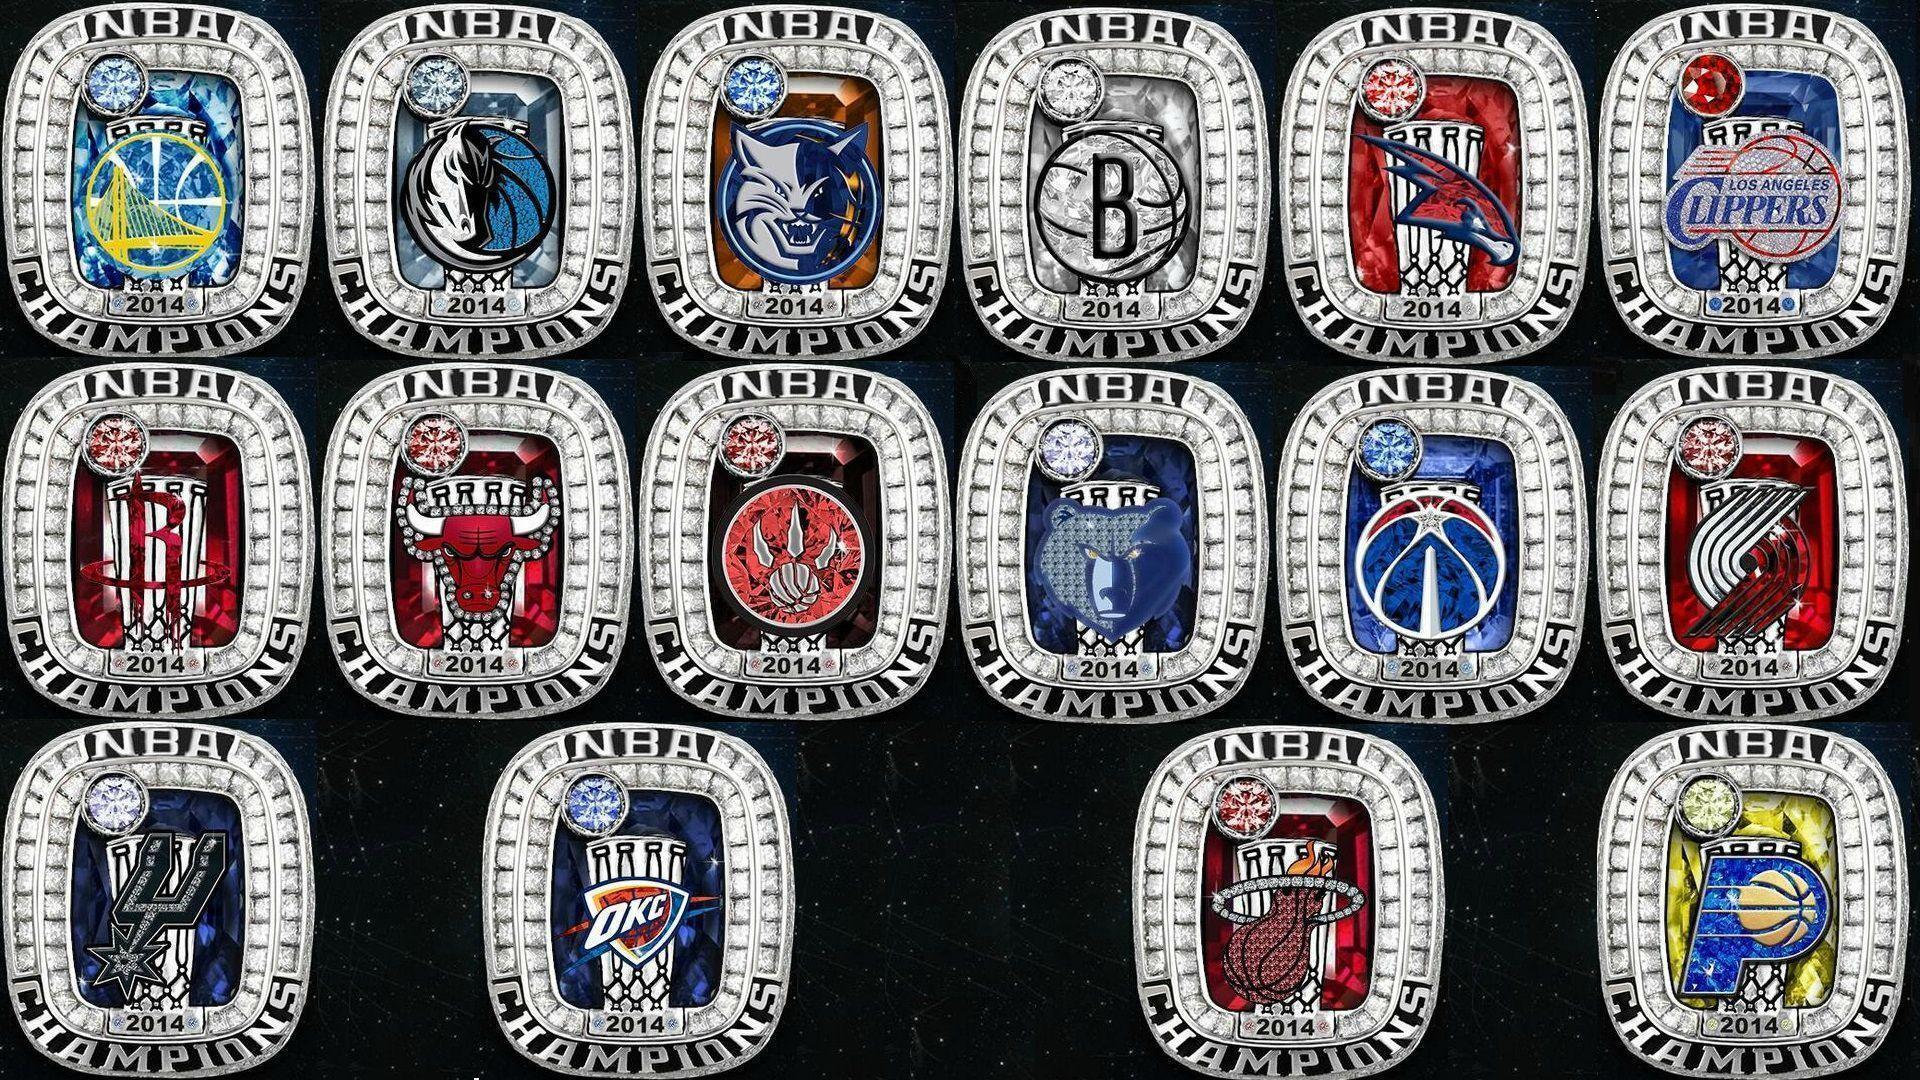 98+] NBA Championship Ring Wallpapers - WallpaperSafari